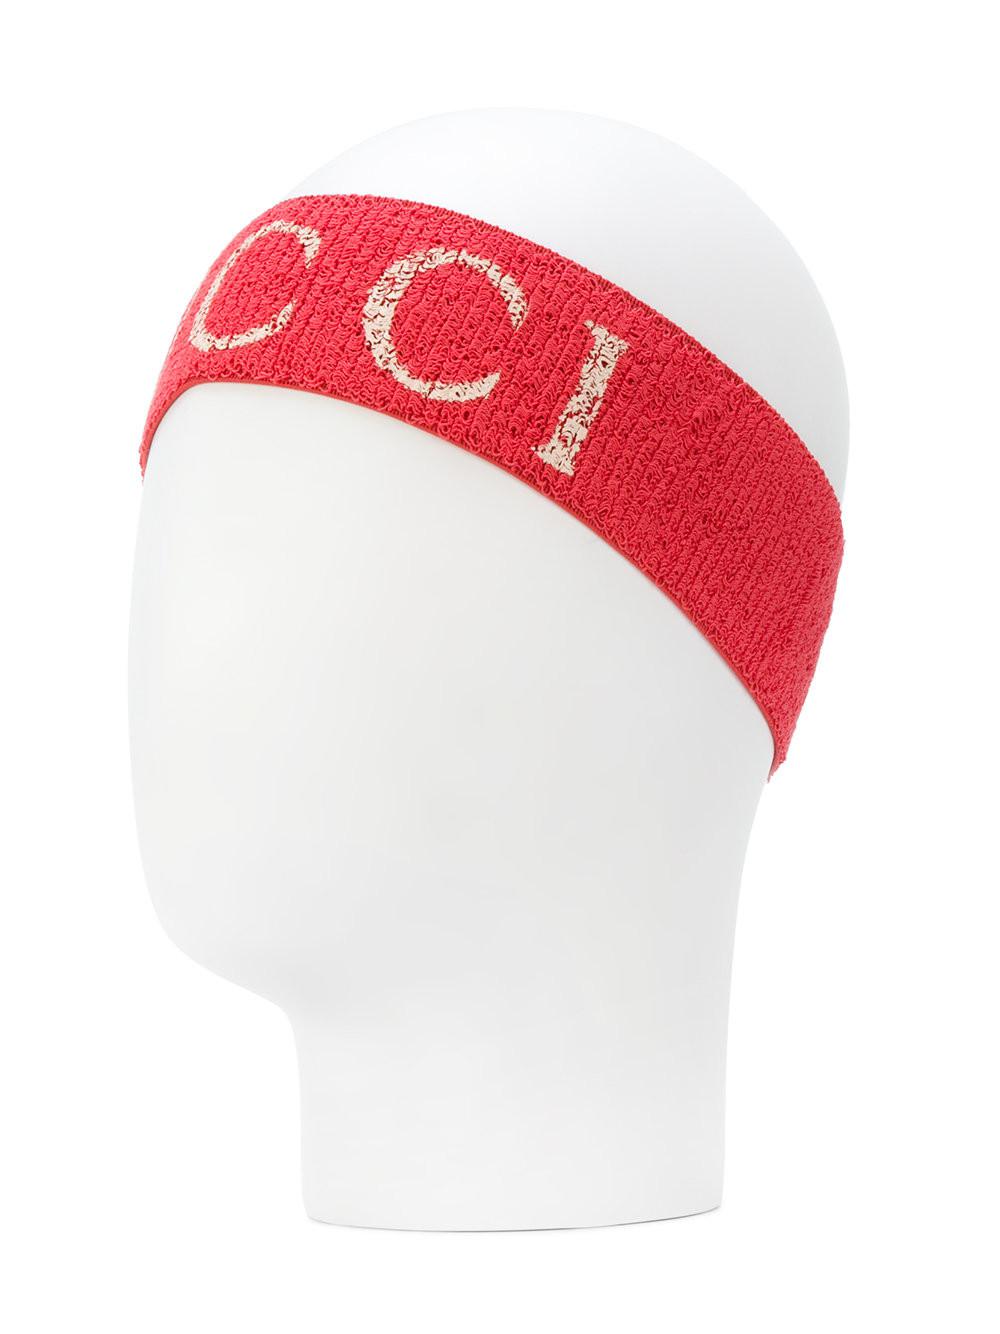 Korrespondent igen Forord Gucci Cotton Elastic Logo Headband in Red/White (Red) - Lyst